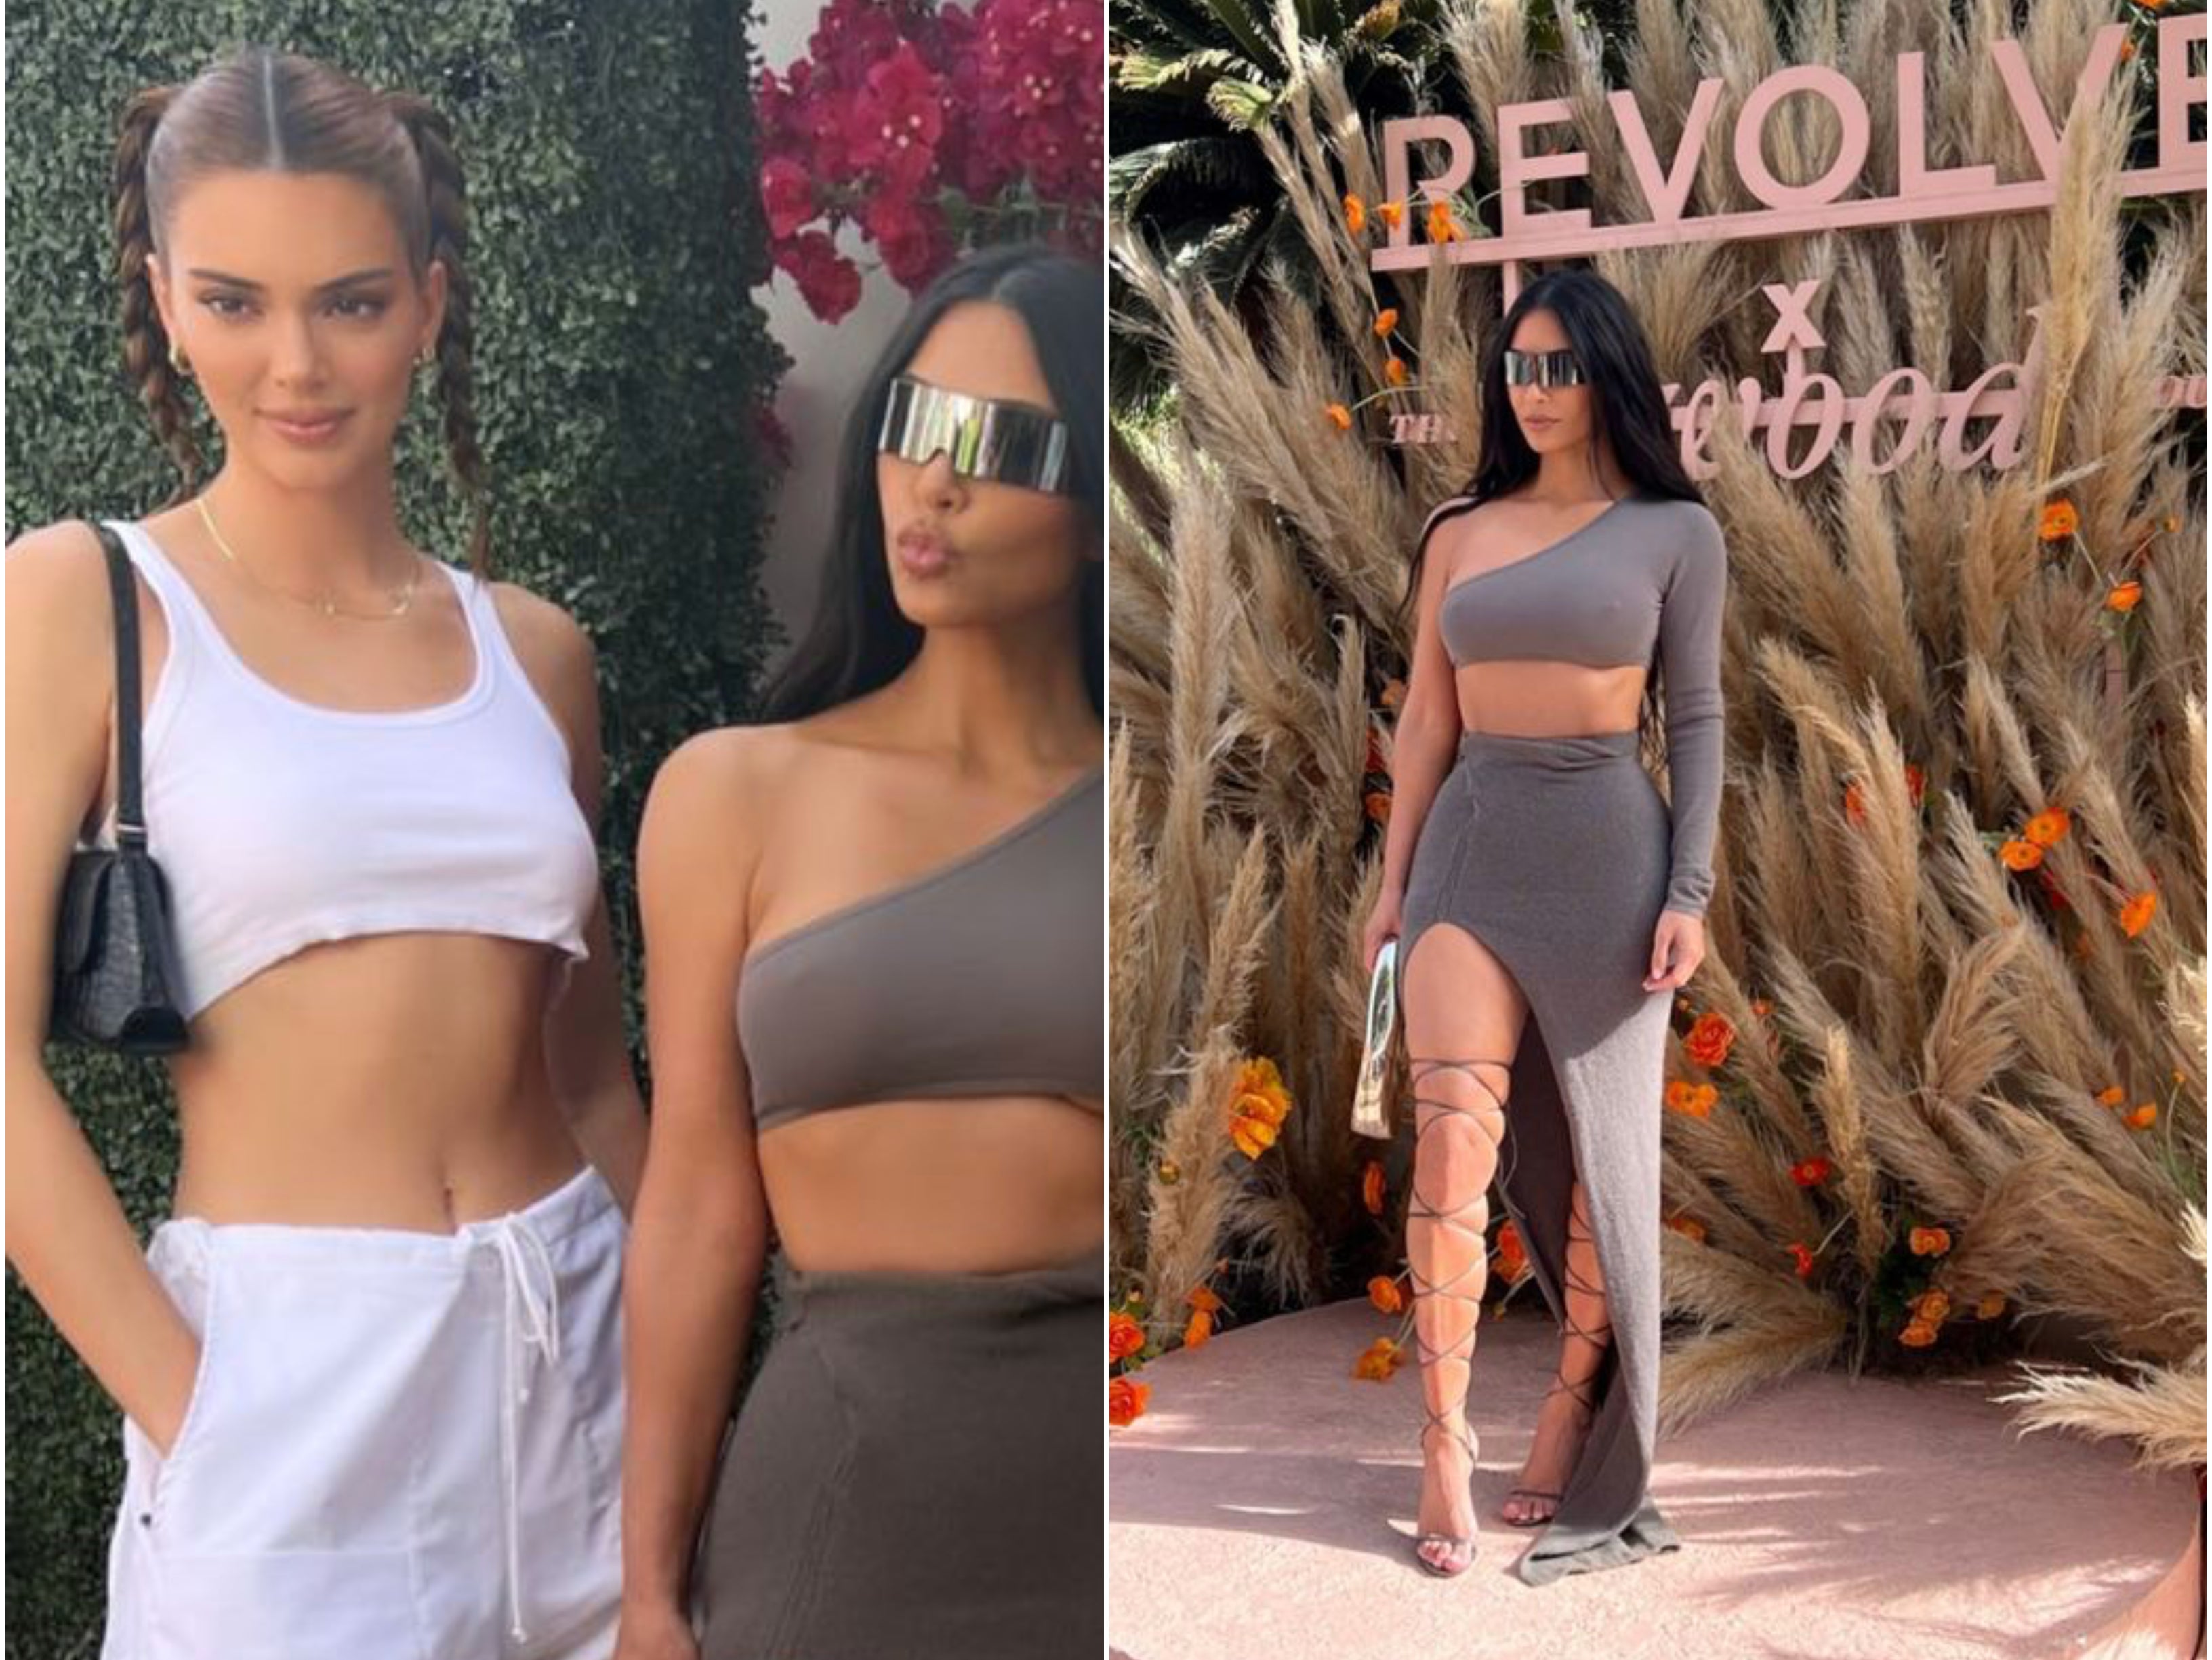 Kim Kardashian and Kendall Jenner attend Revolve Festival